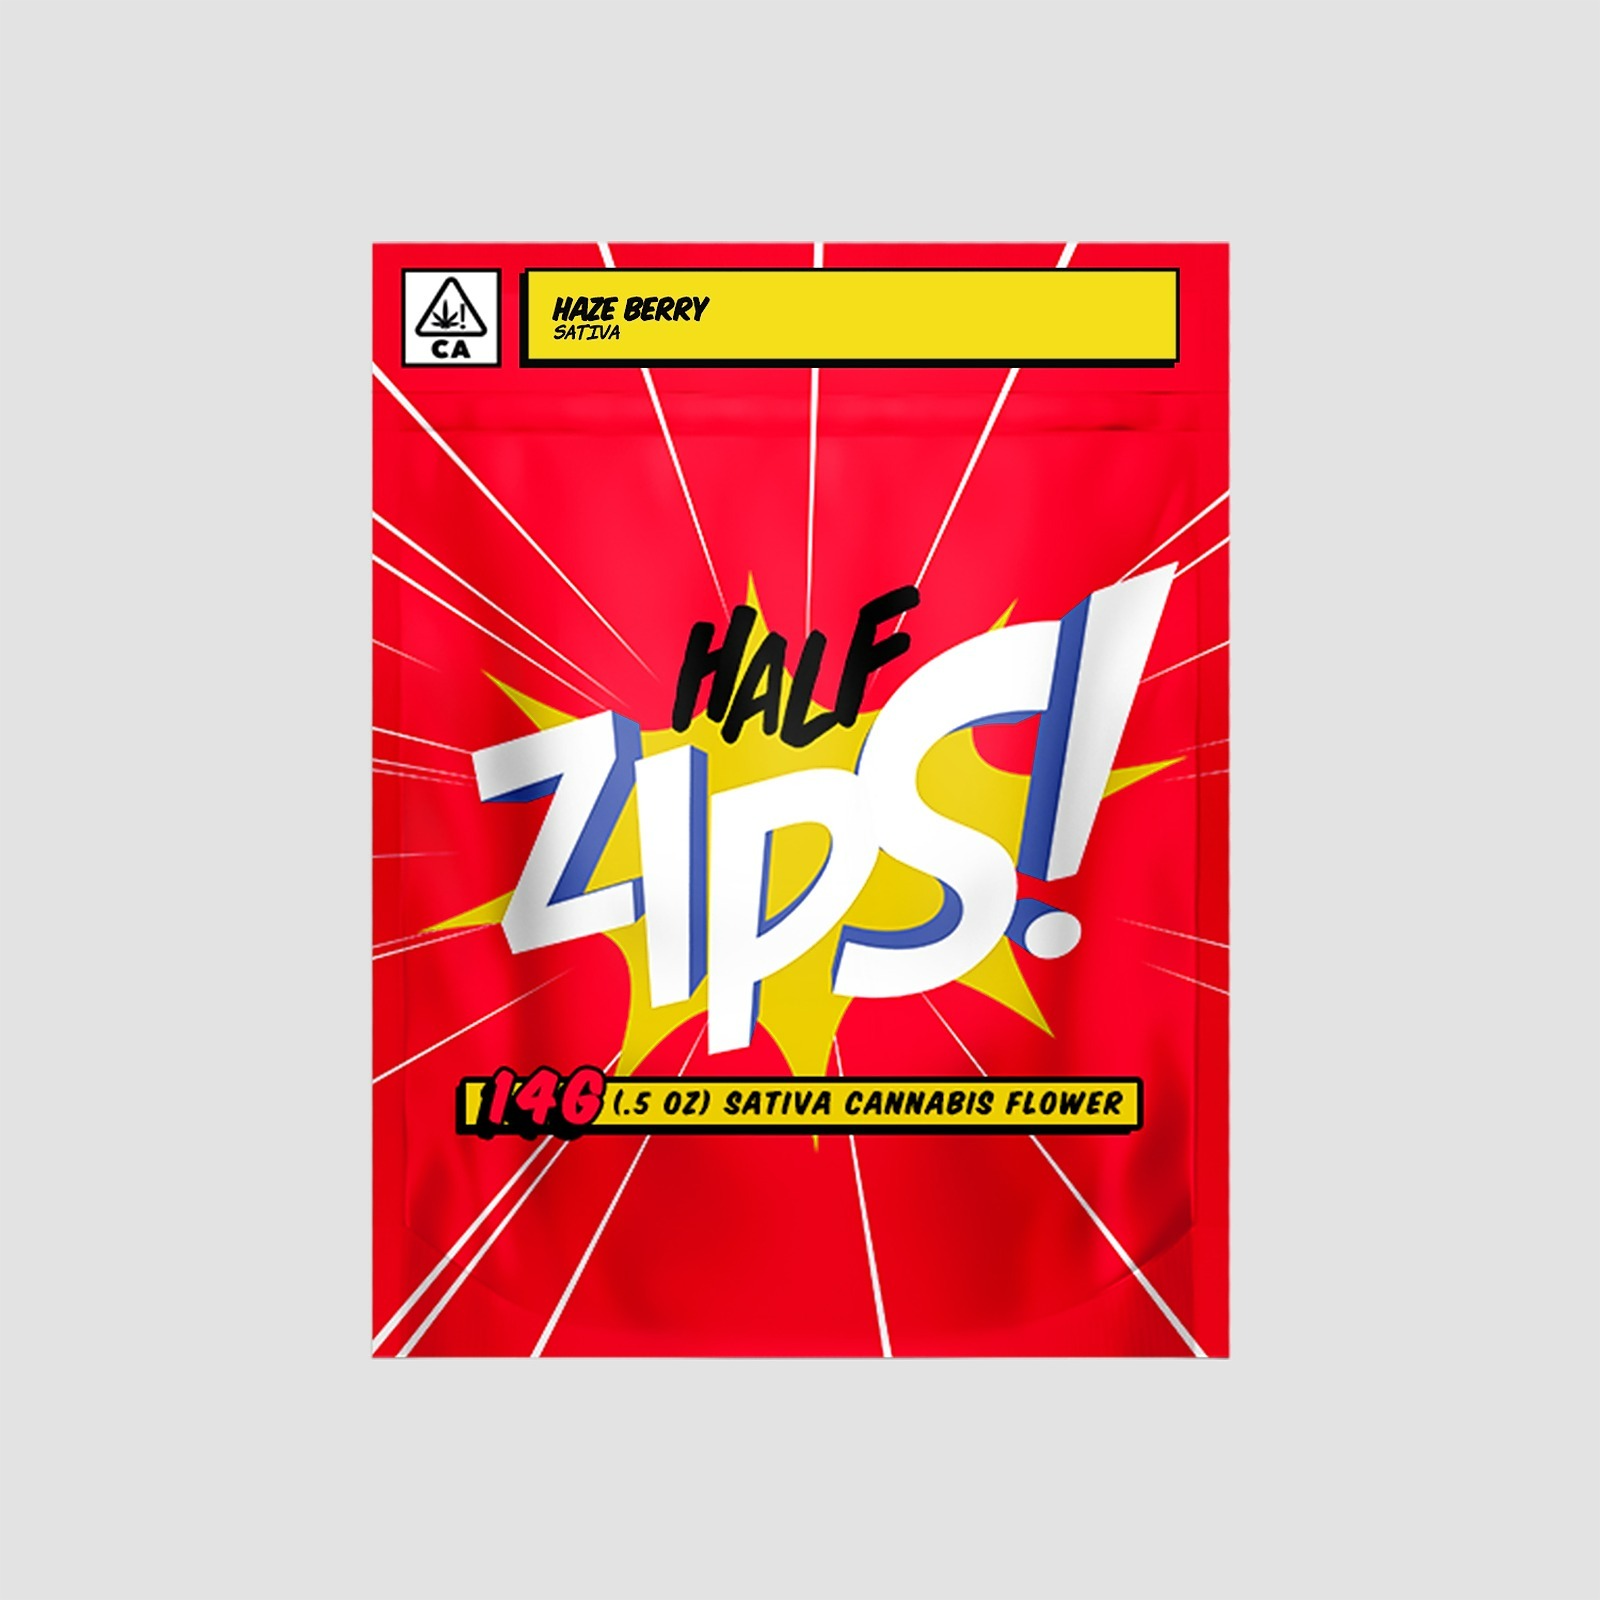 Zips!: Haze Berry - Greenhouse - Sativa (14g) | Leafly